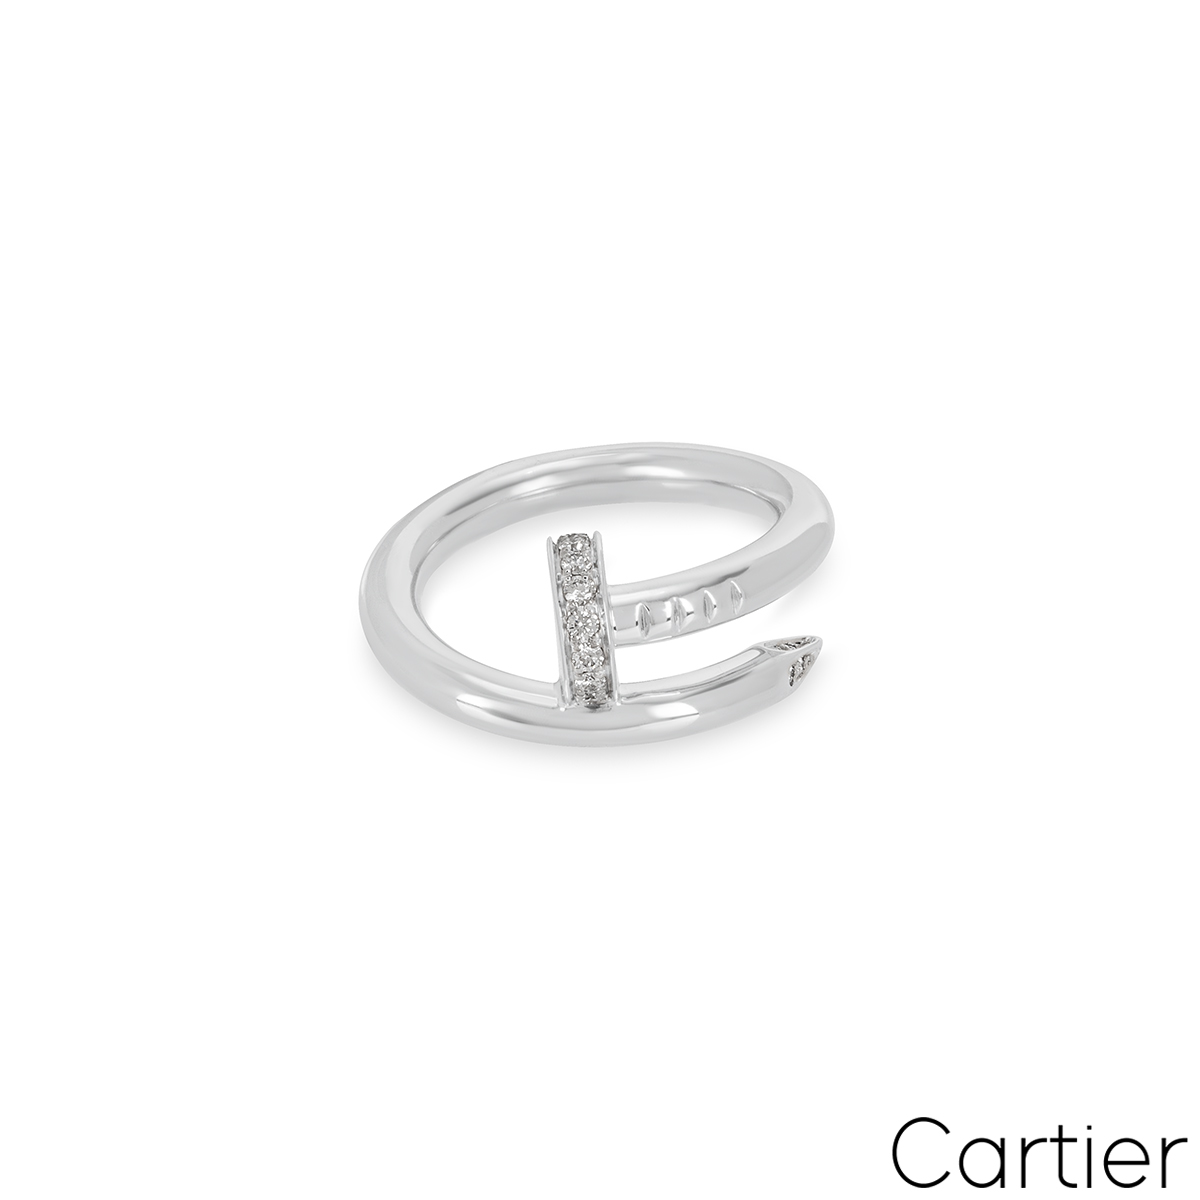 Cartier White Gold Diamond Juste Un Clou Ring Size 49 B4092700